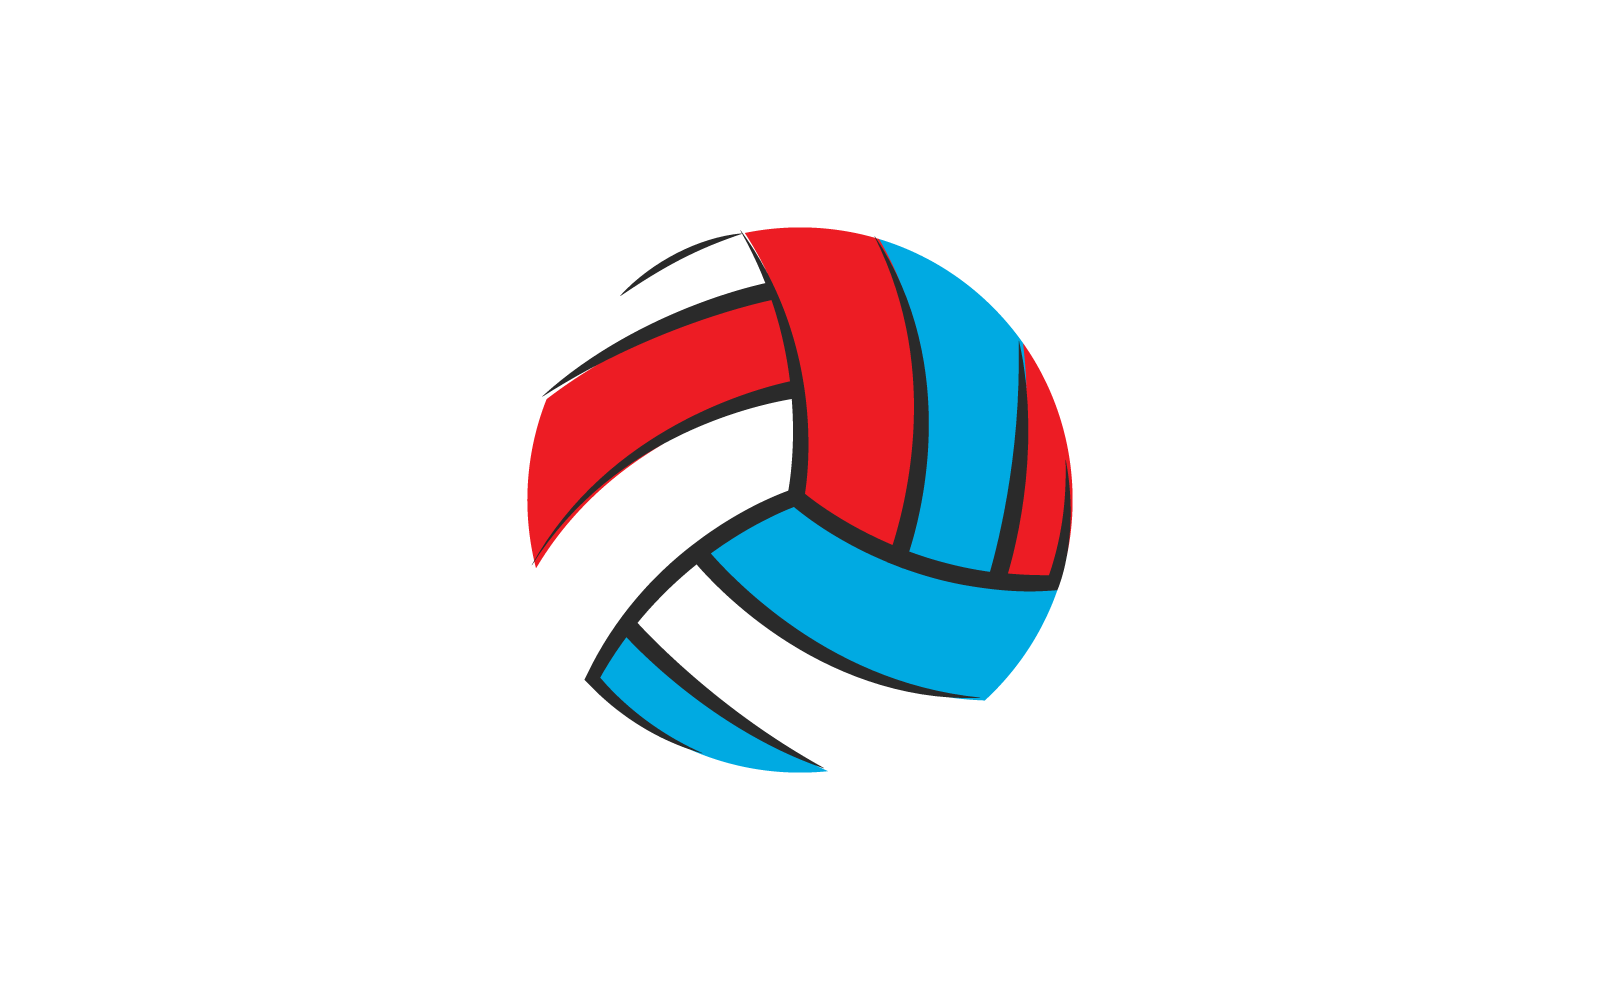 Volley ball logo vector illustration flat design template